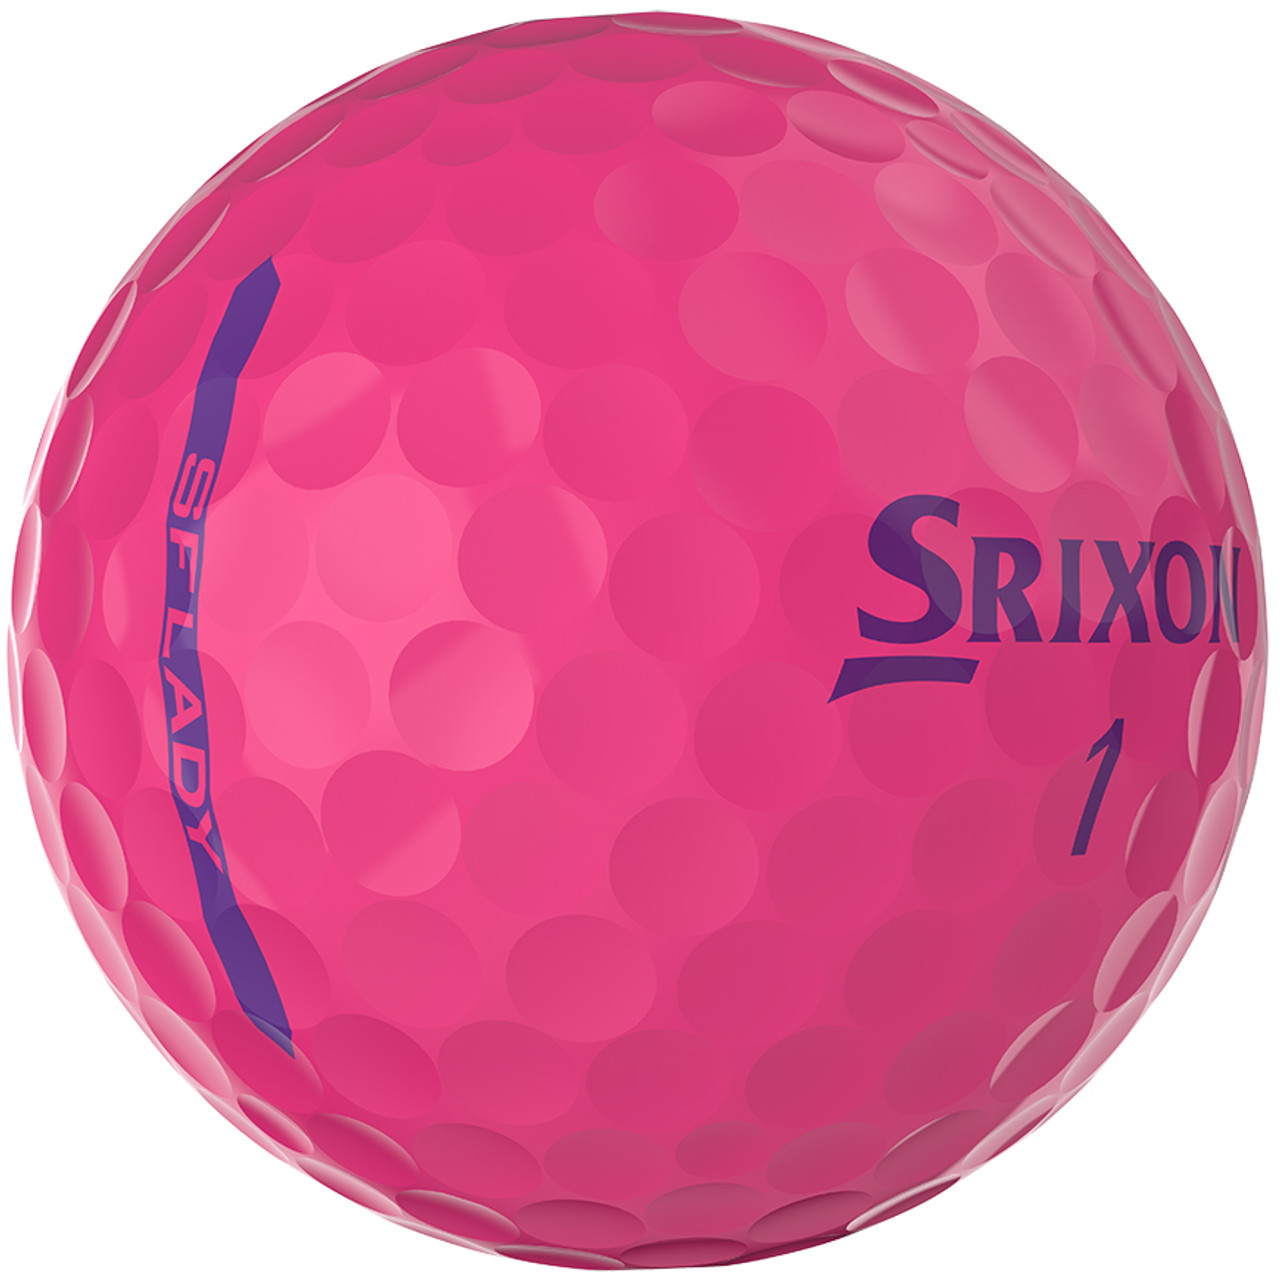 SRIXON - Women's Soft Feel Golf Balls | Morton Golf Sales